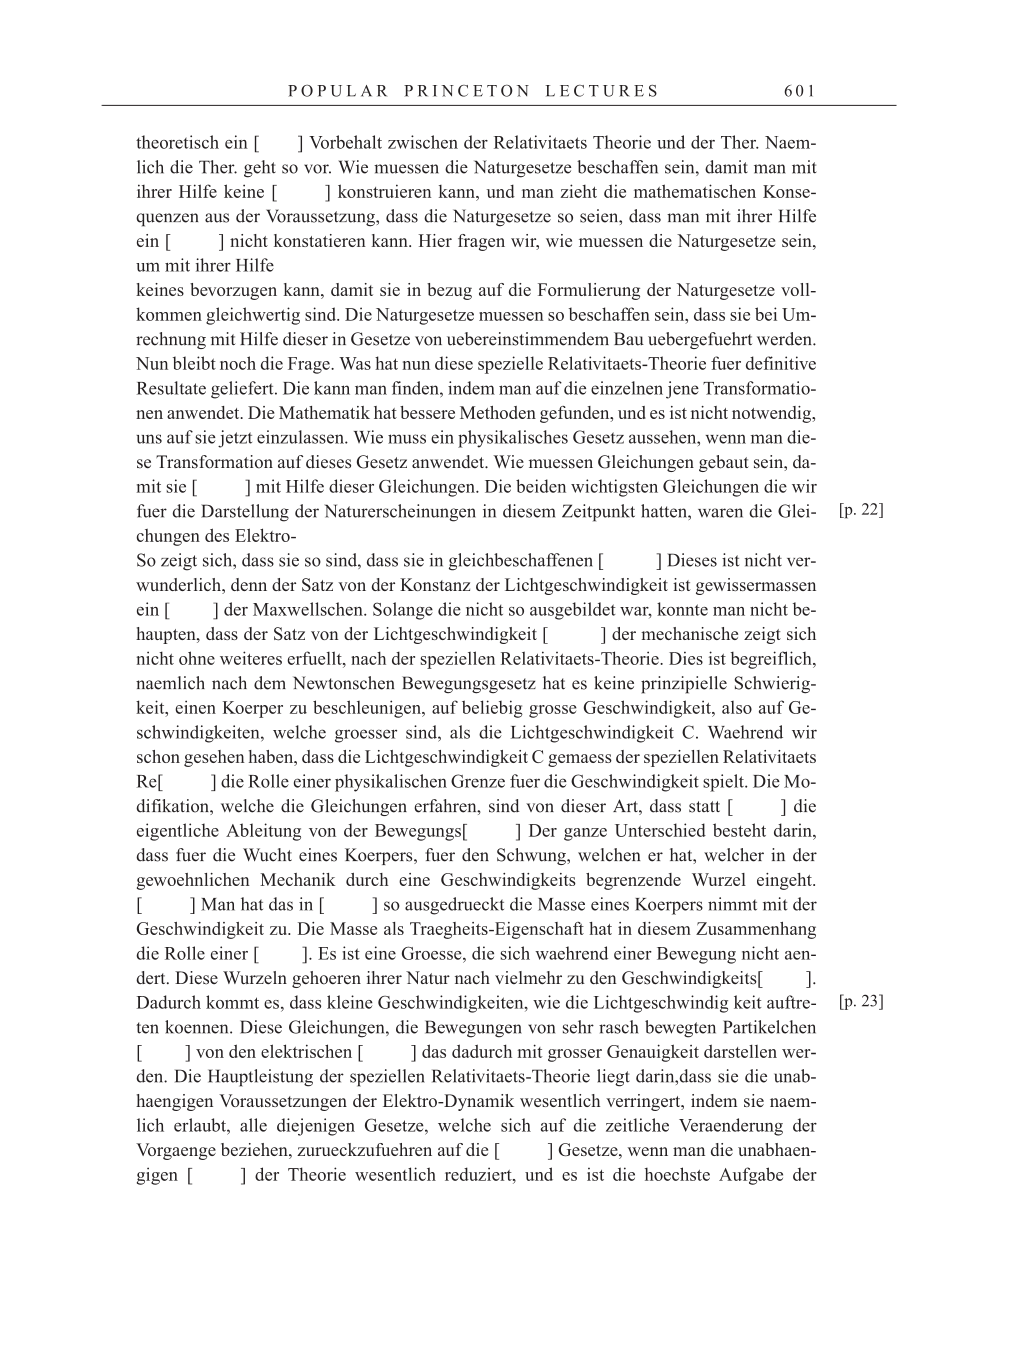 Volume 7: The Berlin Years: Writings, 1918-1921 page 601